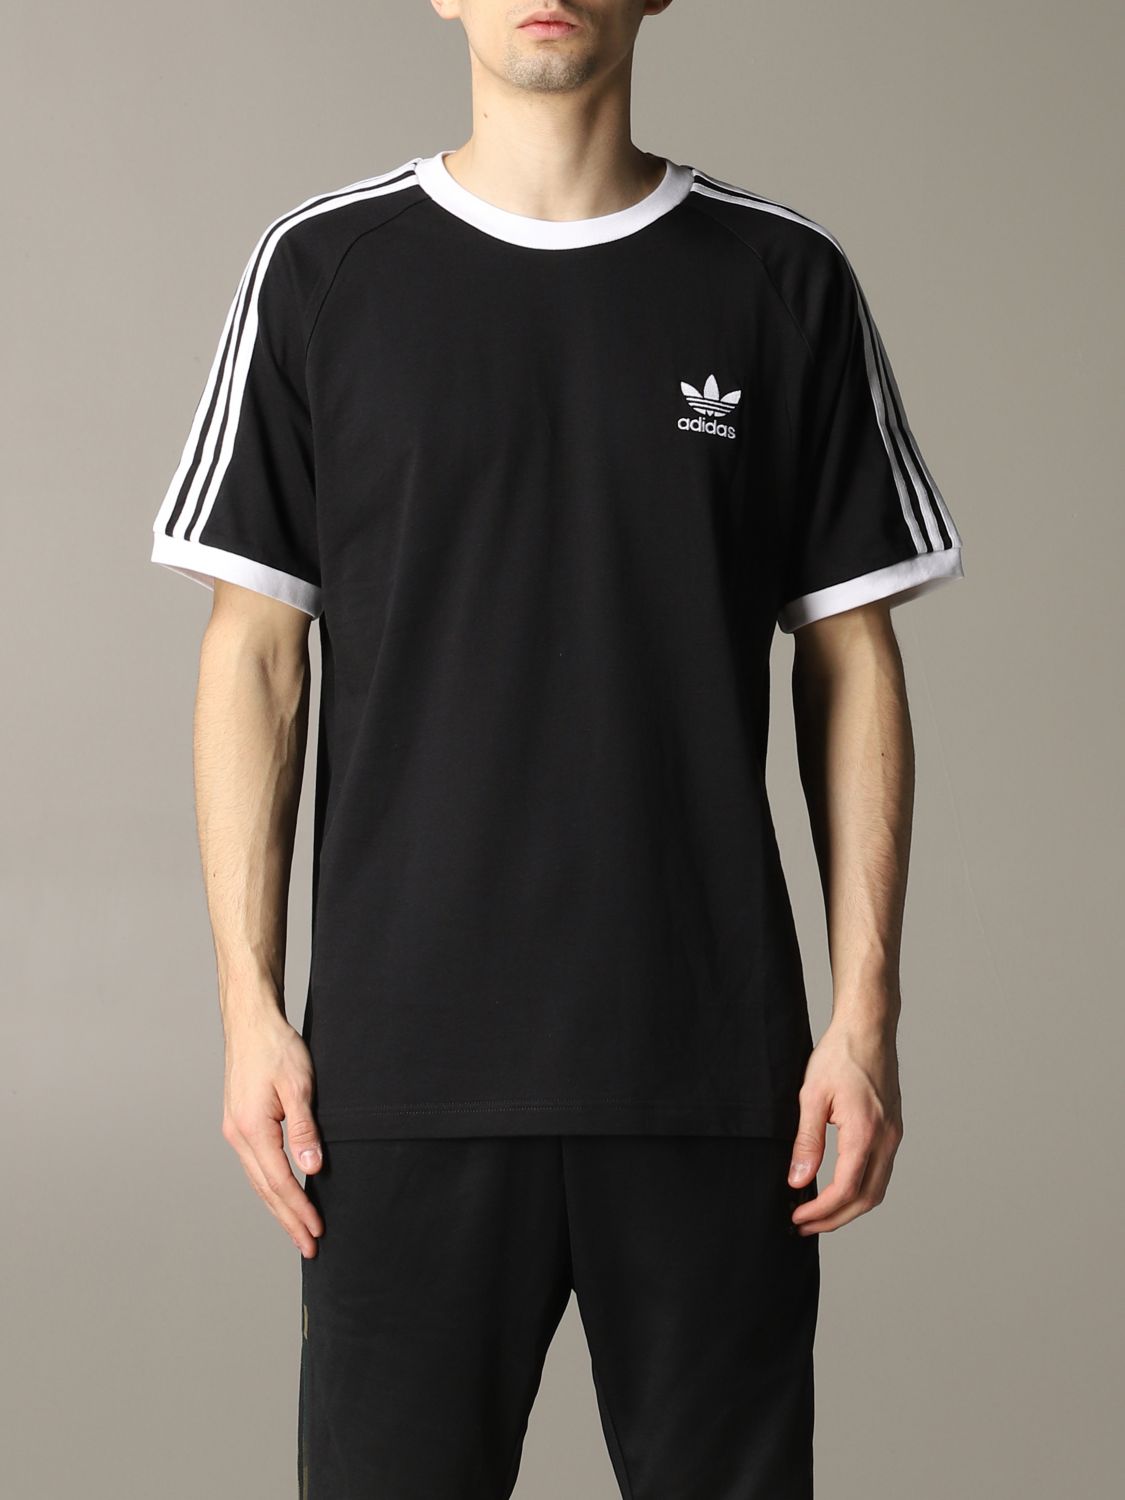 ADIDAS ORIGINALS: short-sleeved T-shirt with logo - Black | Adidas Originals t-shirt CW1202 online on